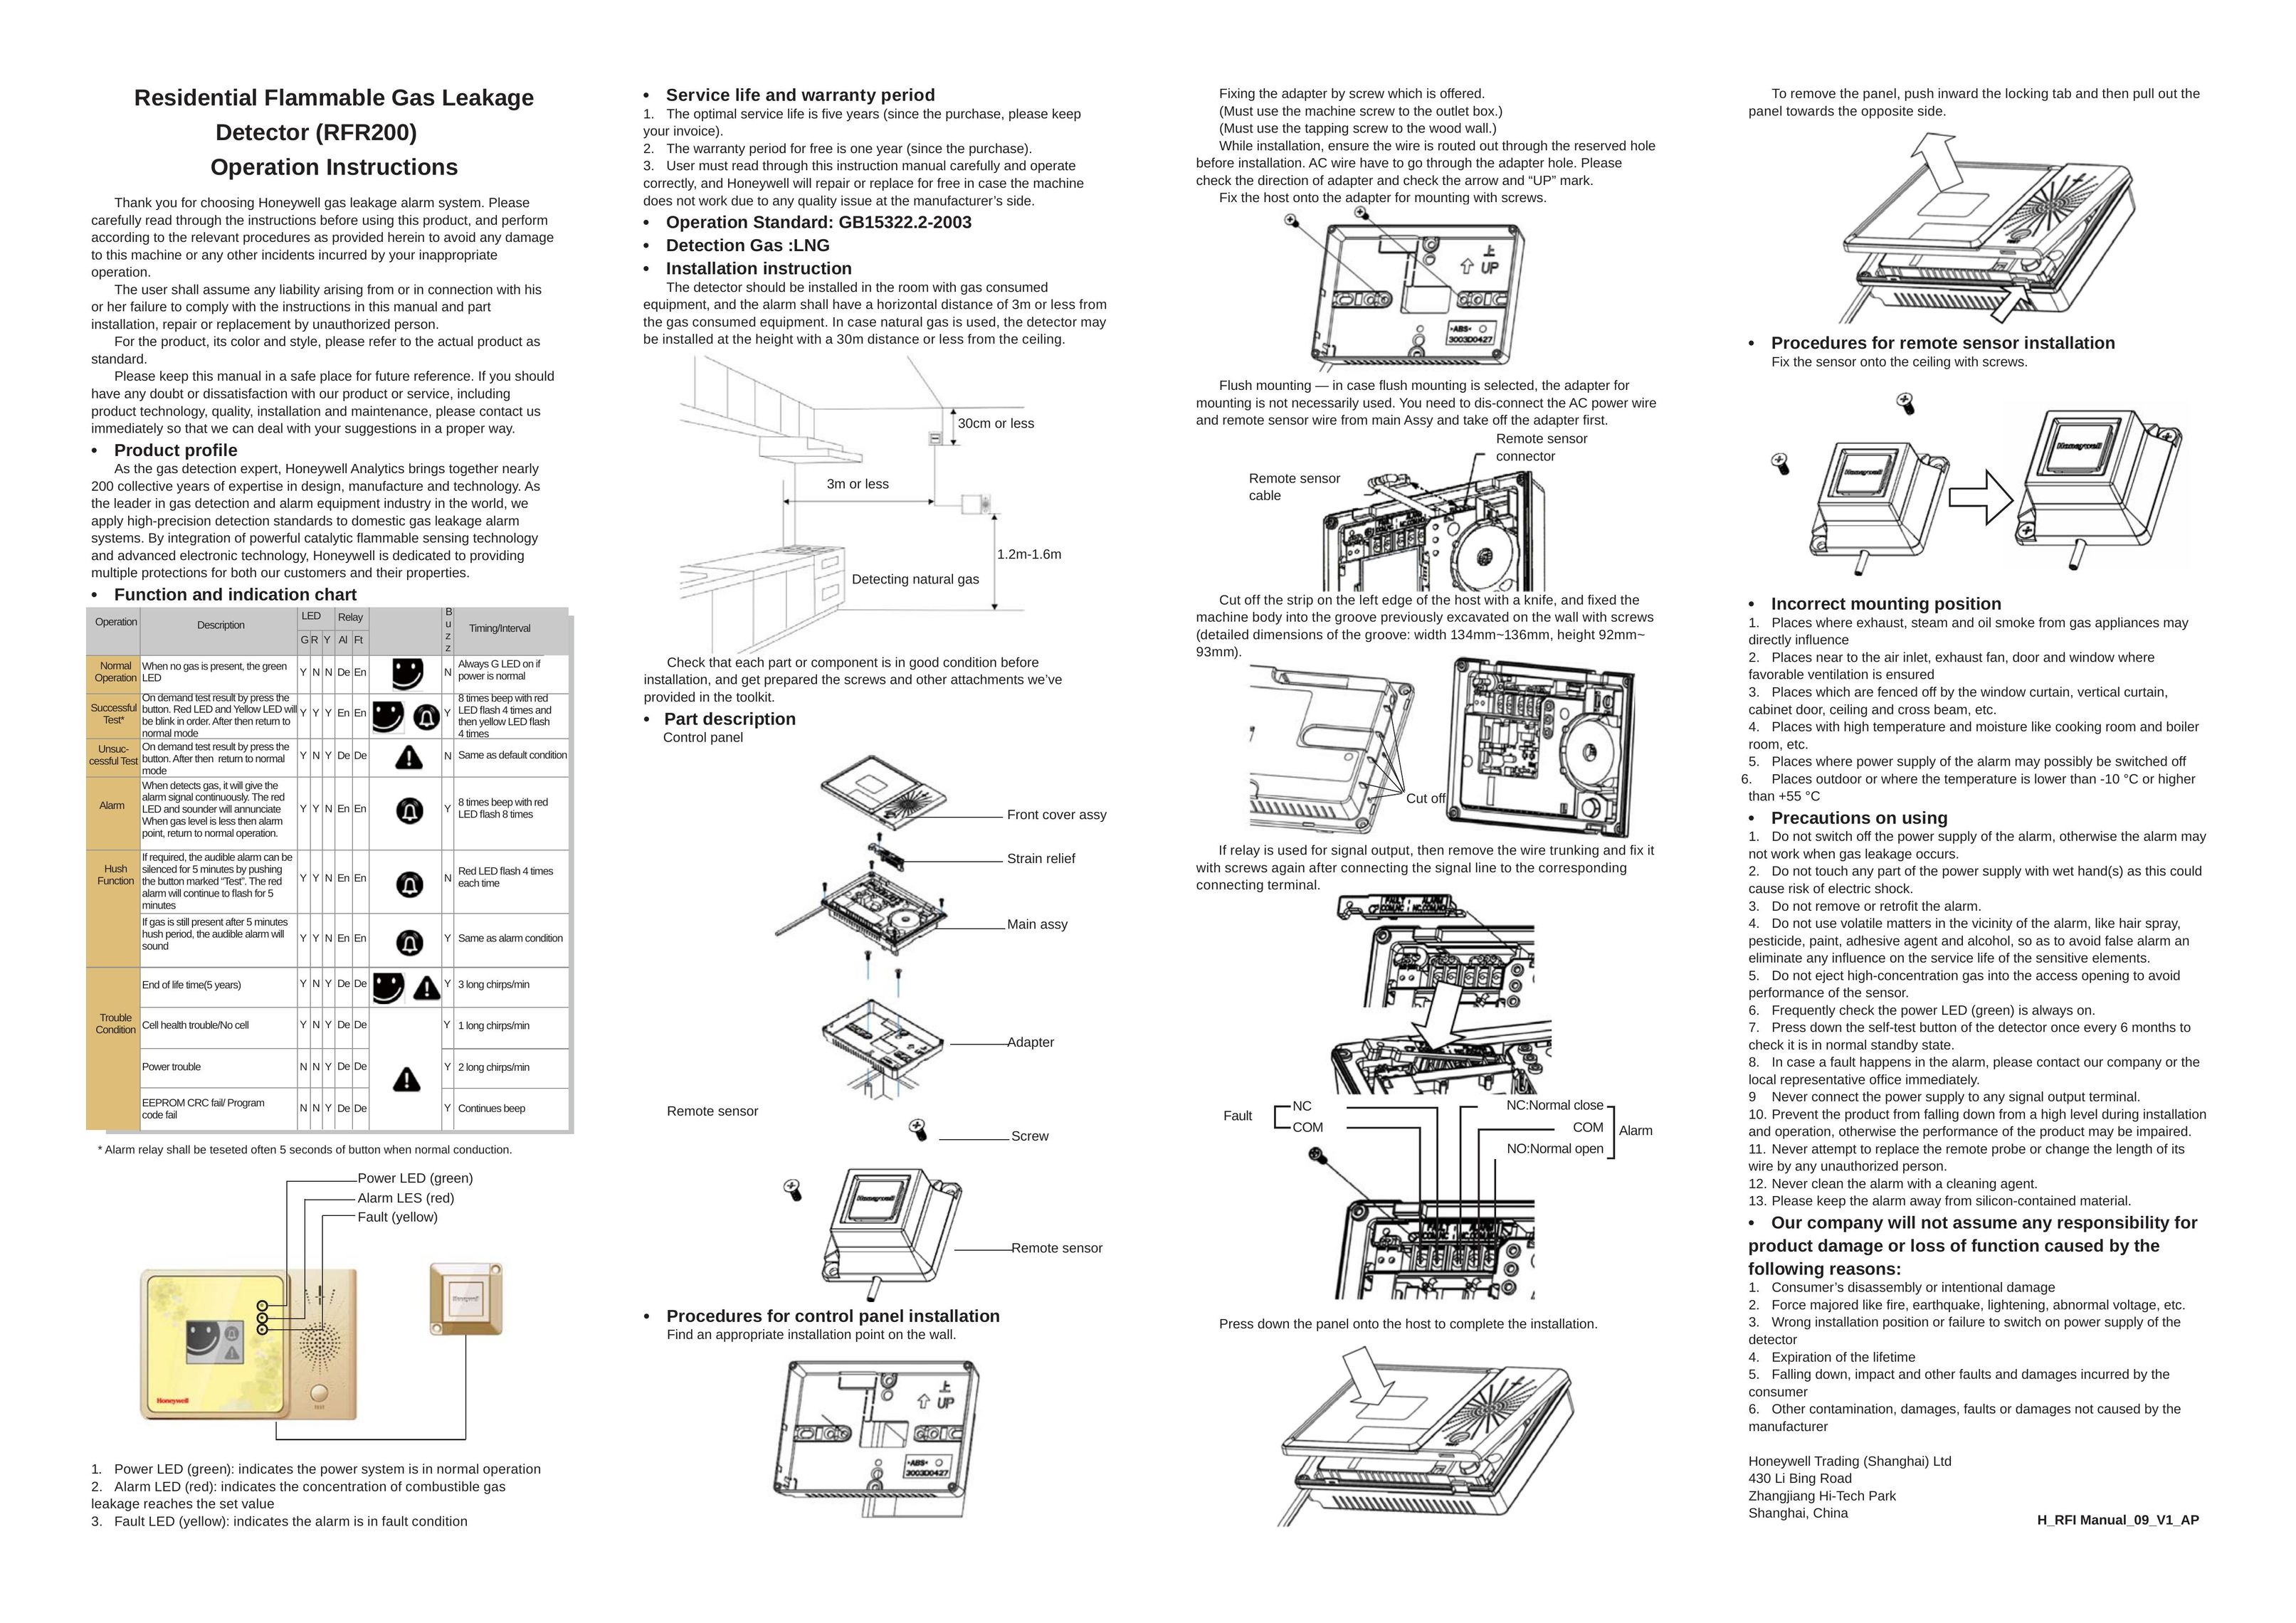 Honeywell RFR200 Carbon Monoxide Alarm User Manual